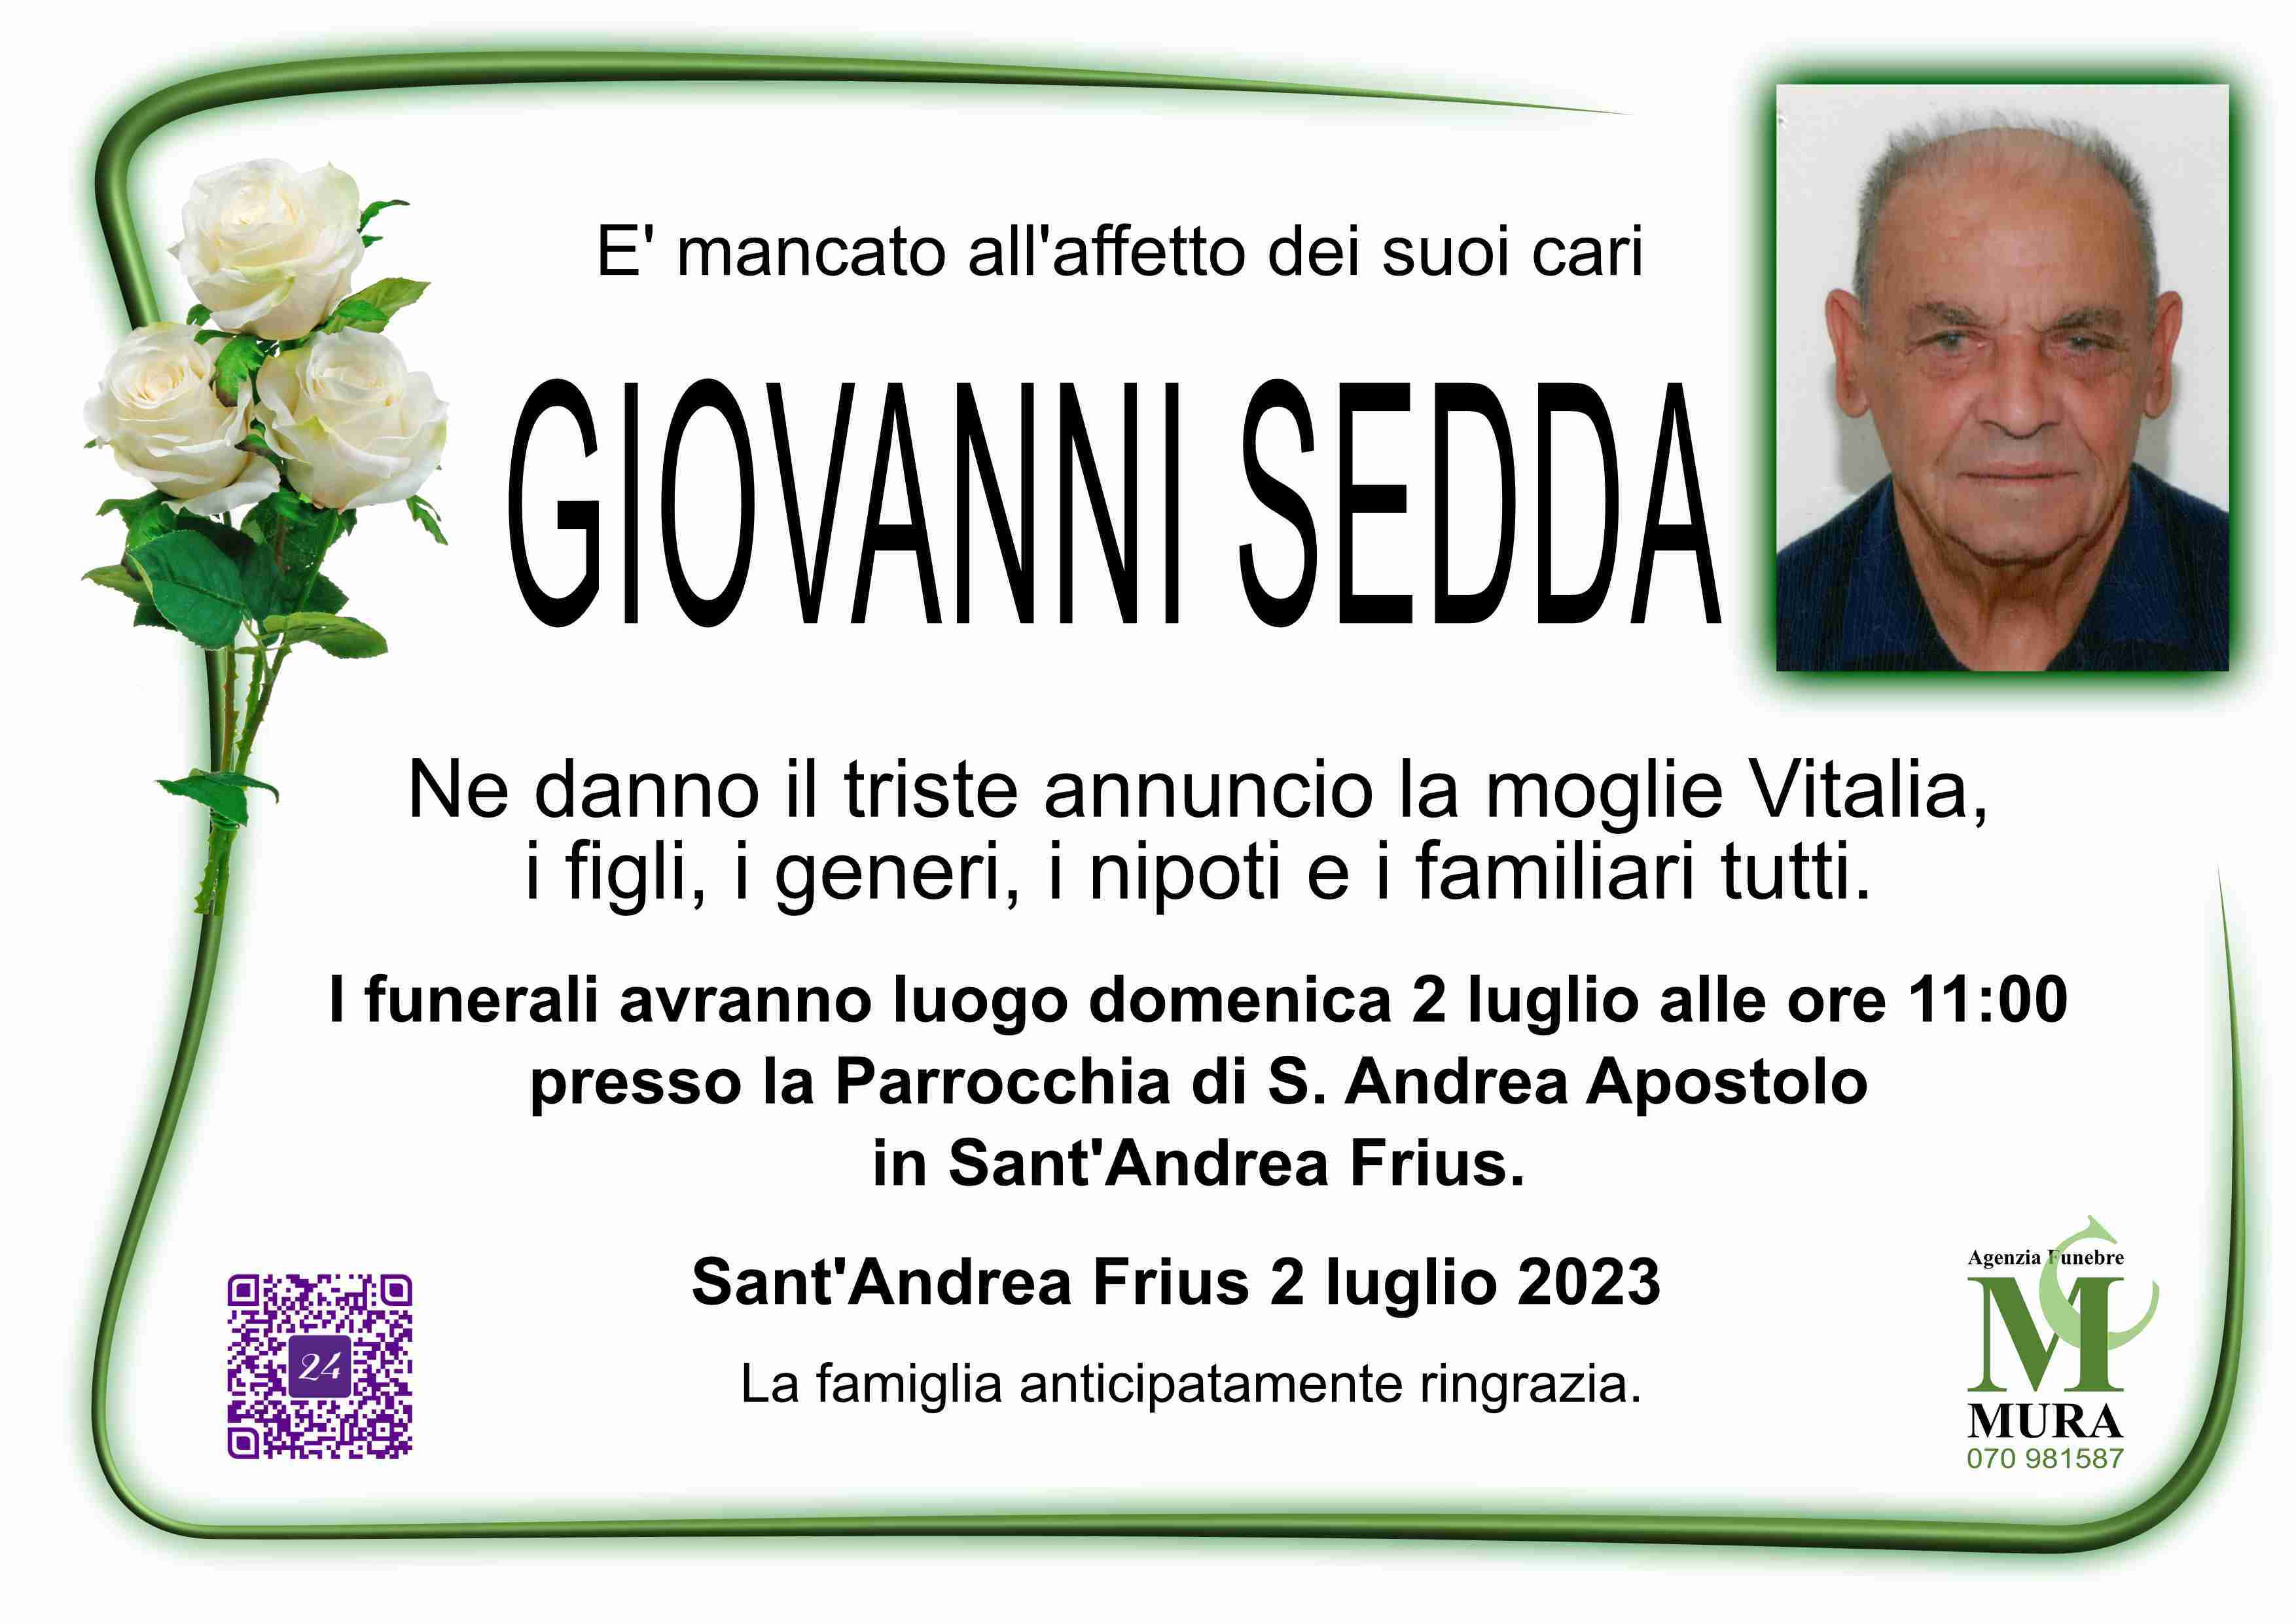 Giovanni Sedda